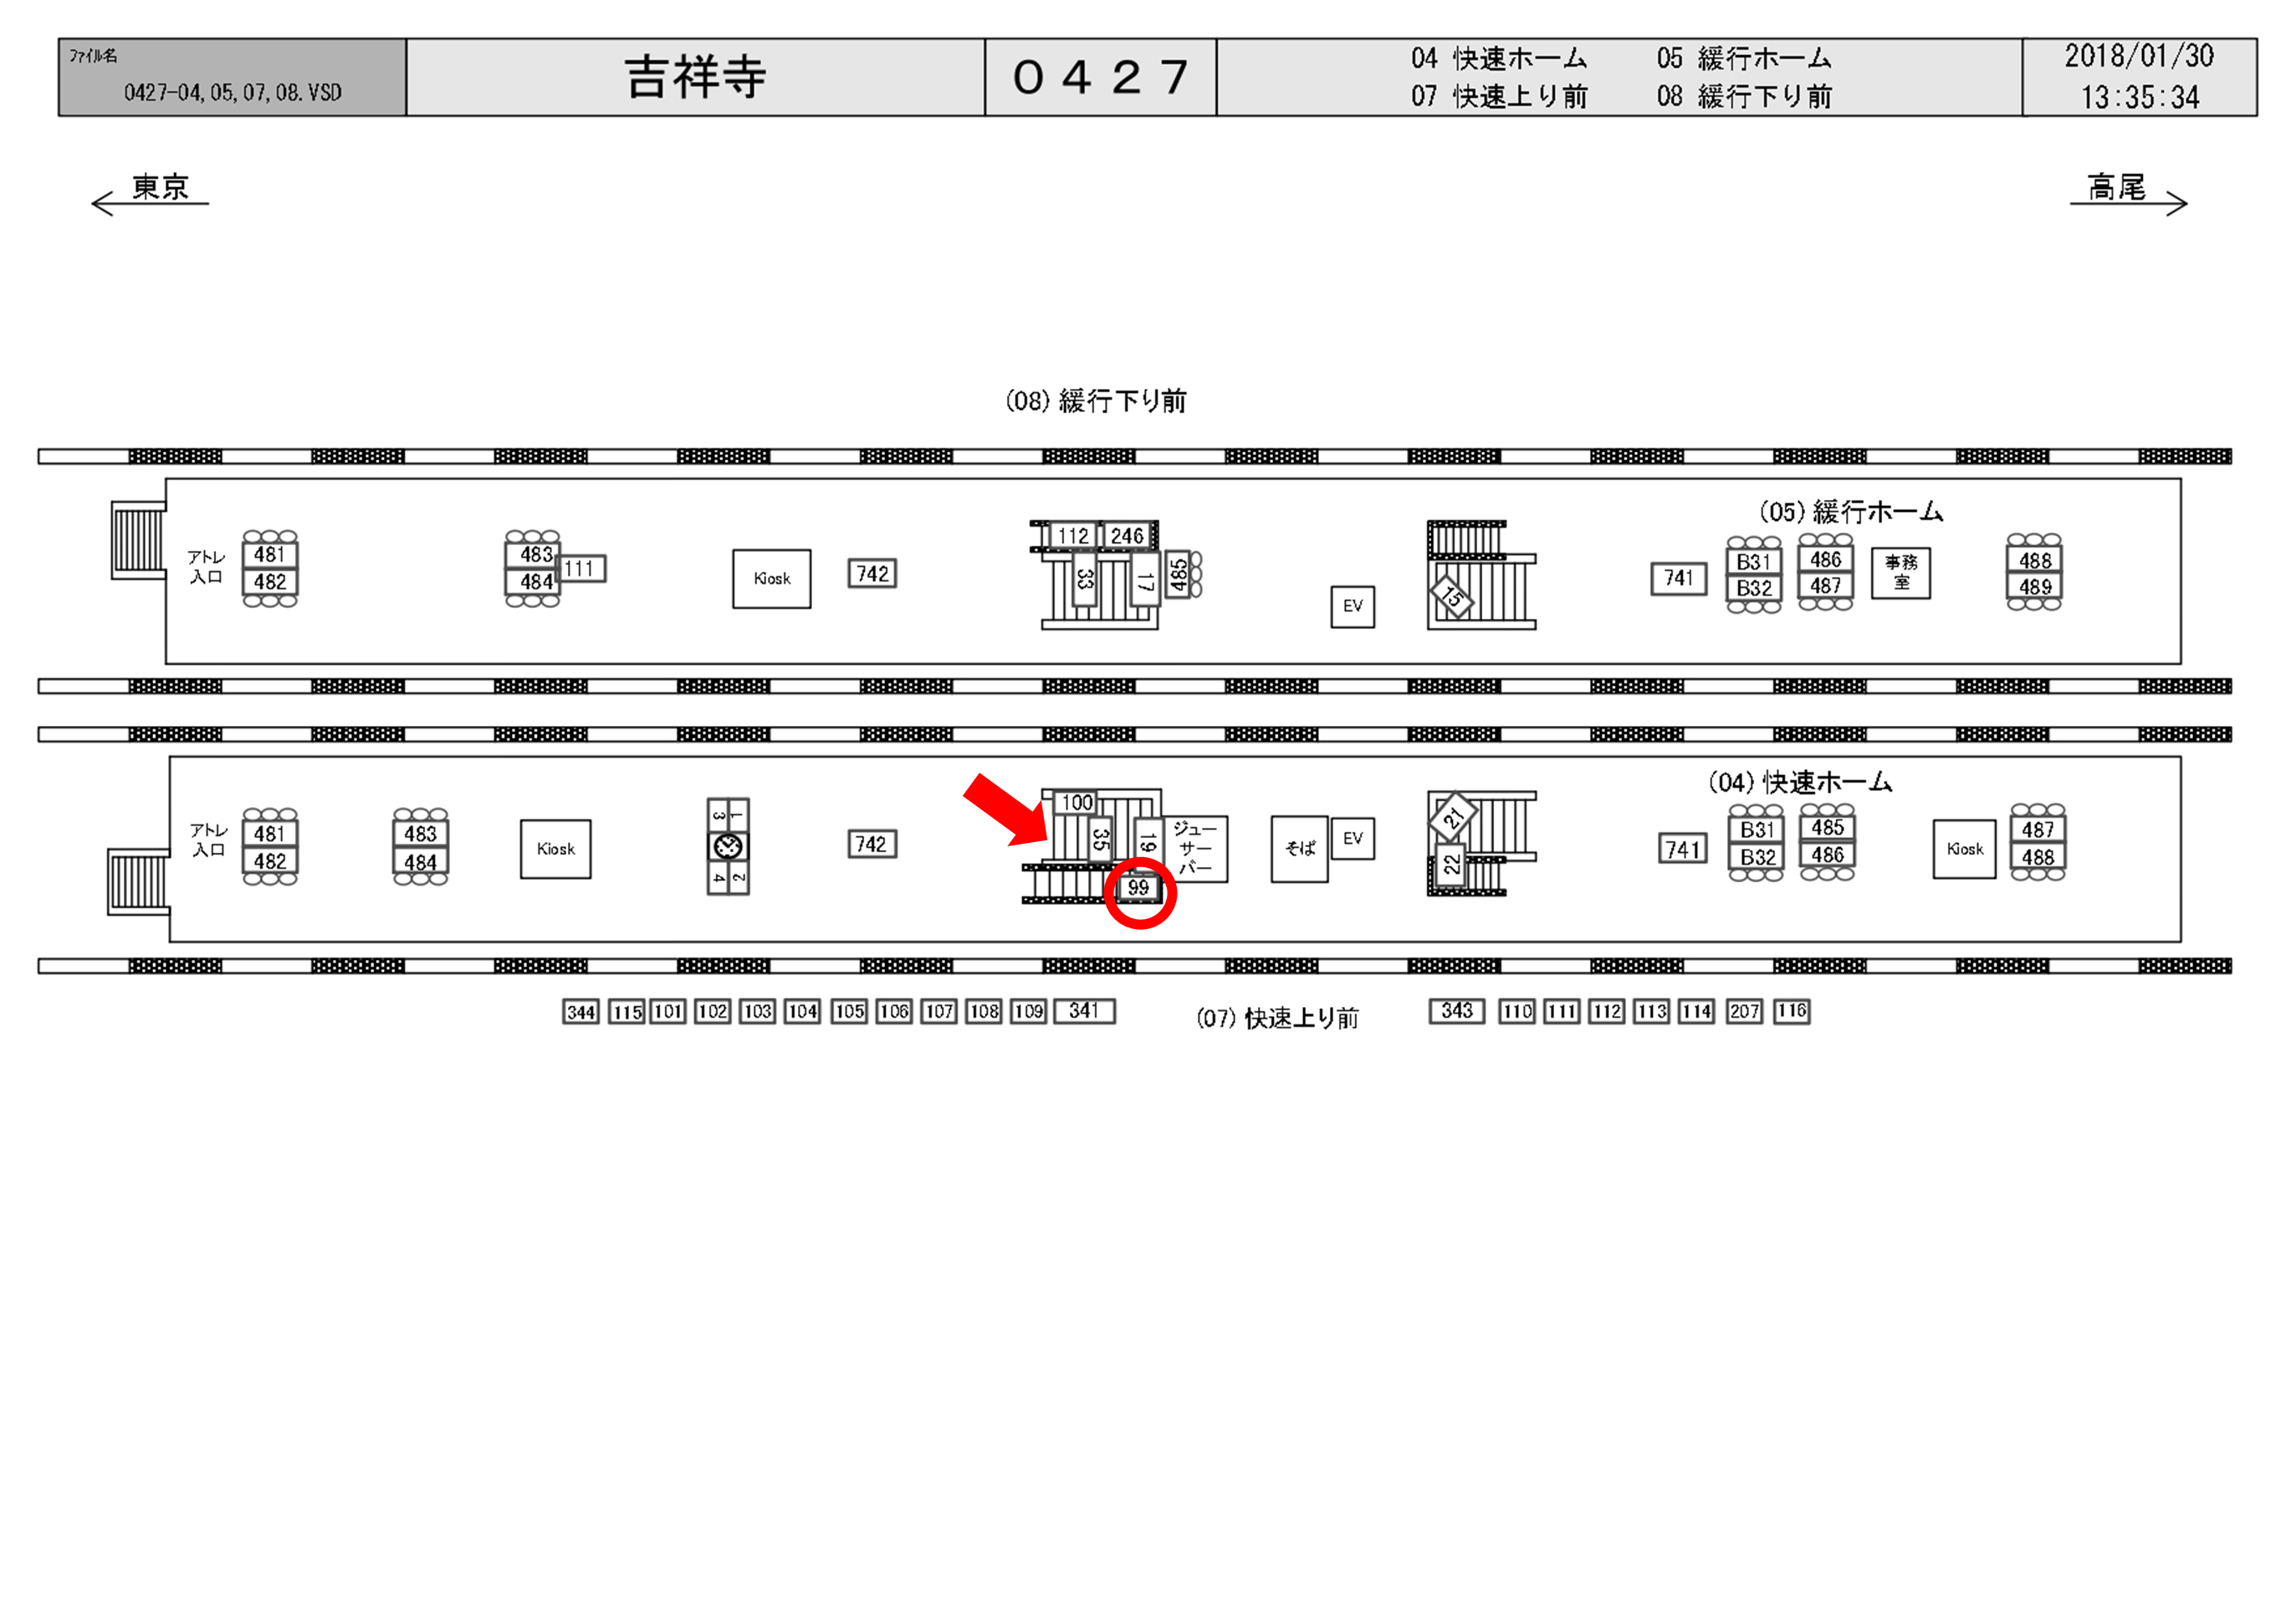 JR東日本 吉祥寺駅 10118-0427-04-099 駅看板・駅広告媒体一覧 | 駅 ...